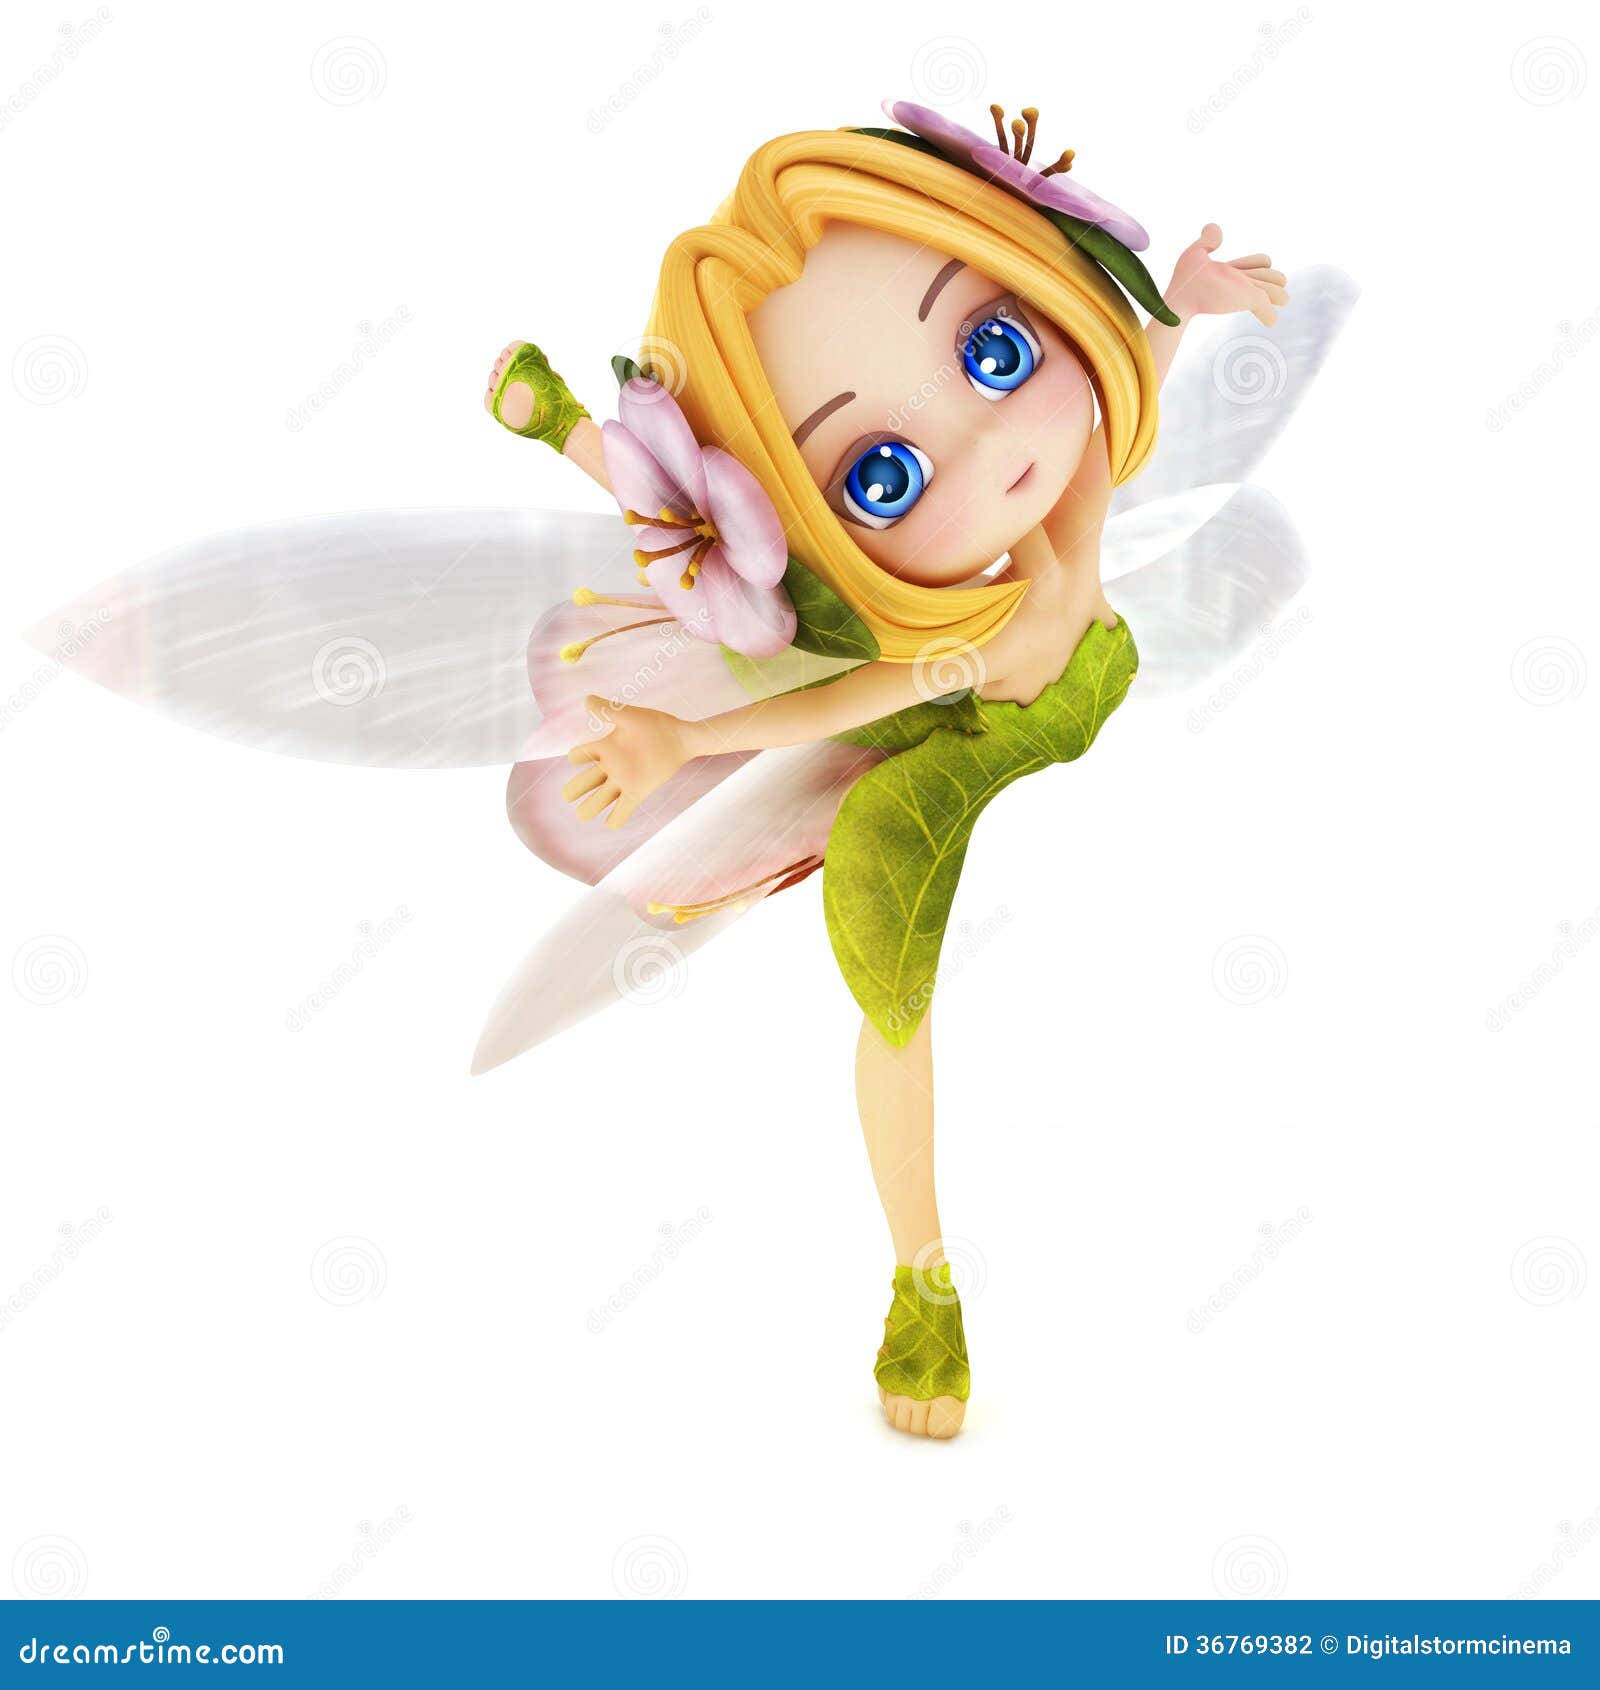 cute toon ballerina fairy